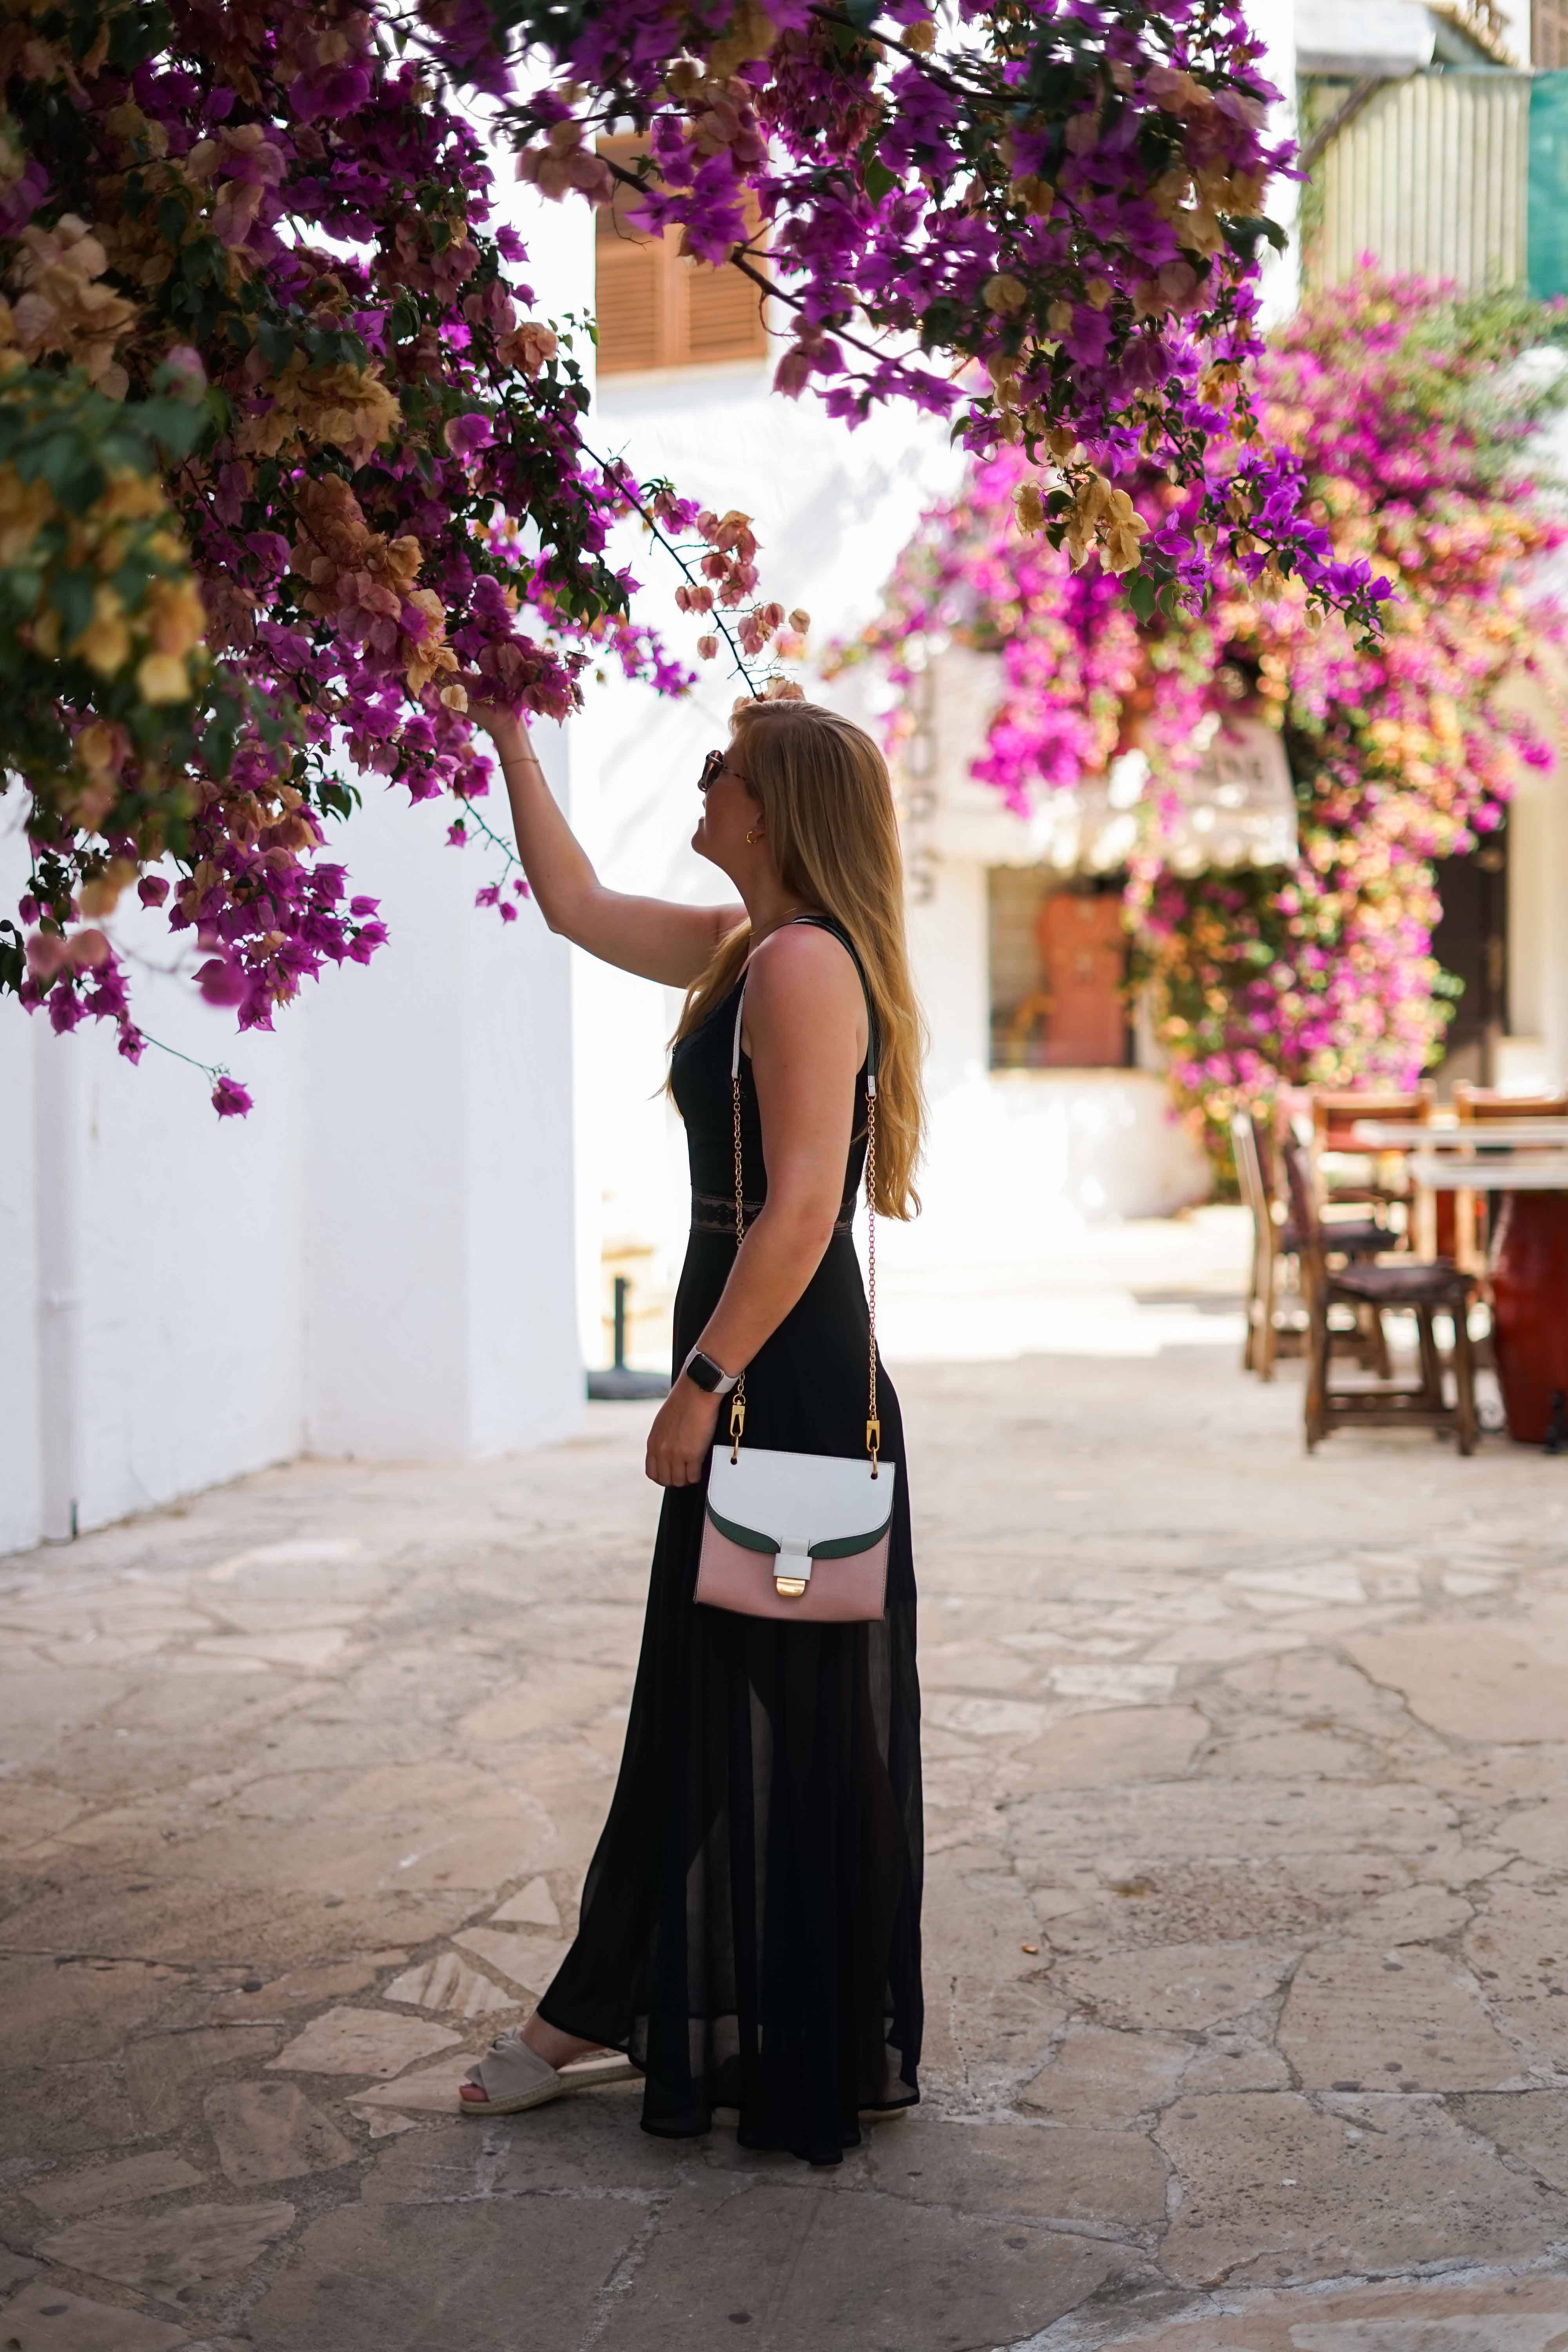 Top 10 Mallorca Instagram Spots Cala D'Or Santorin Blumenlocation Gasse schönste Fotolocations Sehenswürdigkeiten Mallorca 2